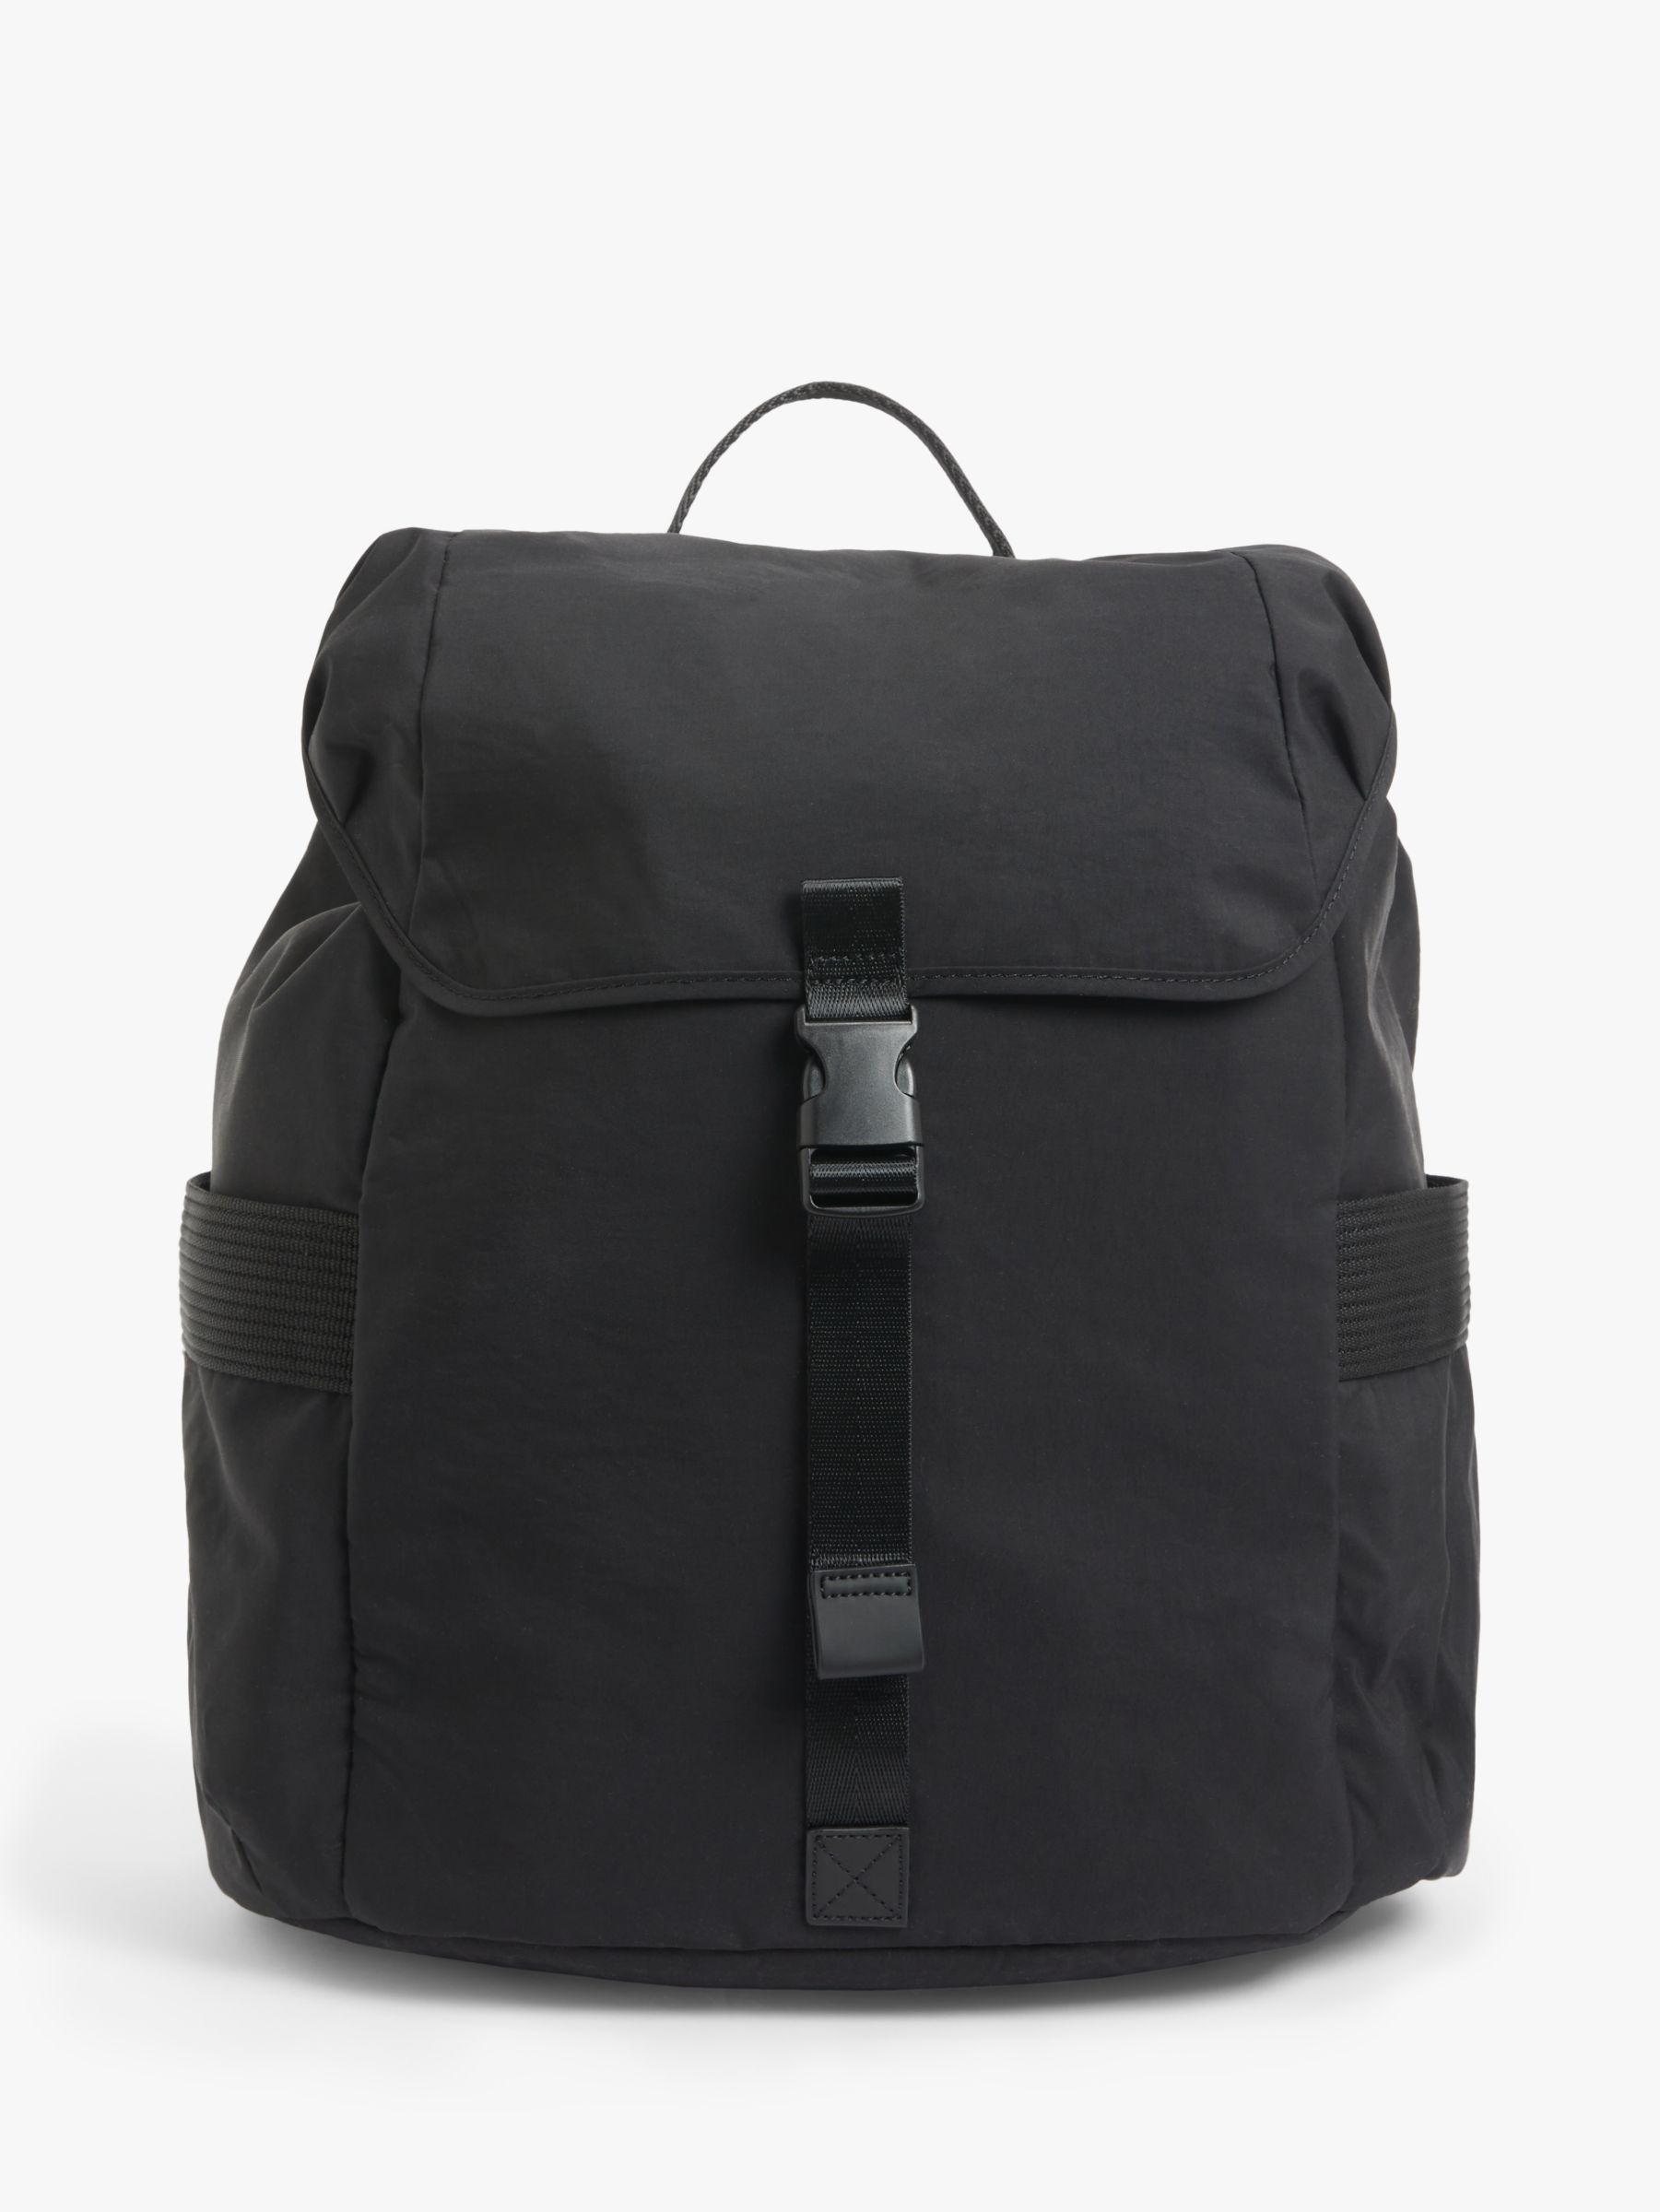 Kin Click Lock Backpack, Black at John Lewis & Partners